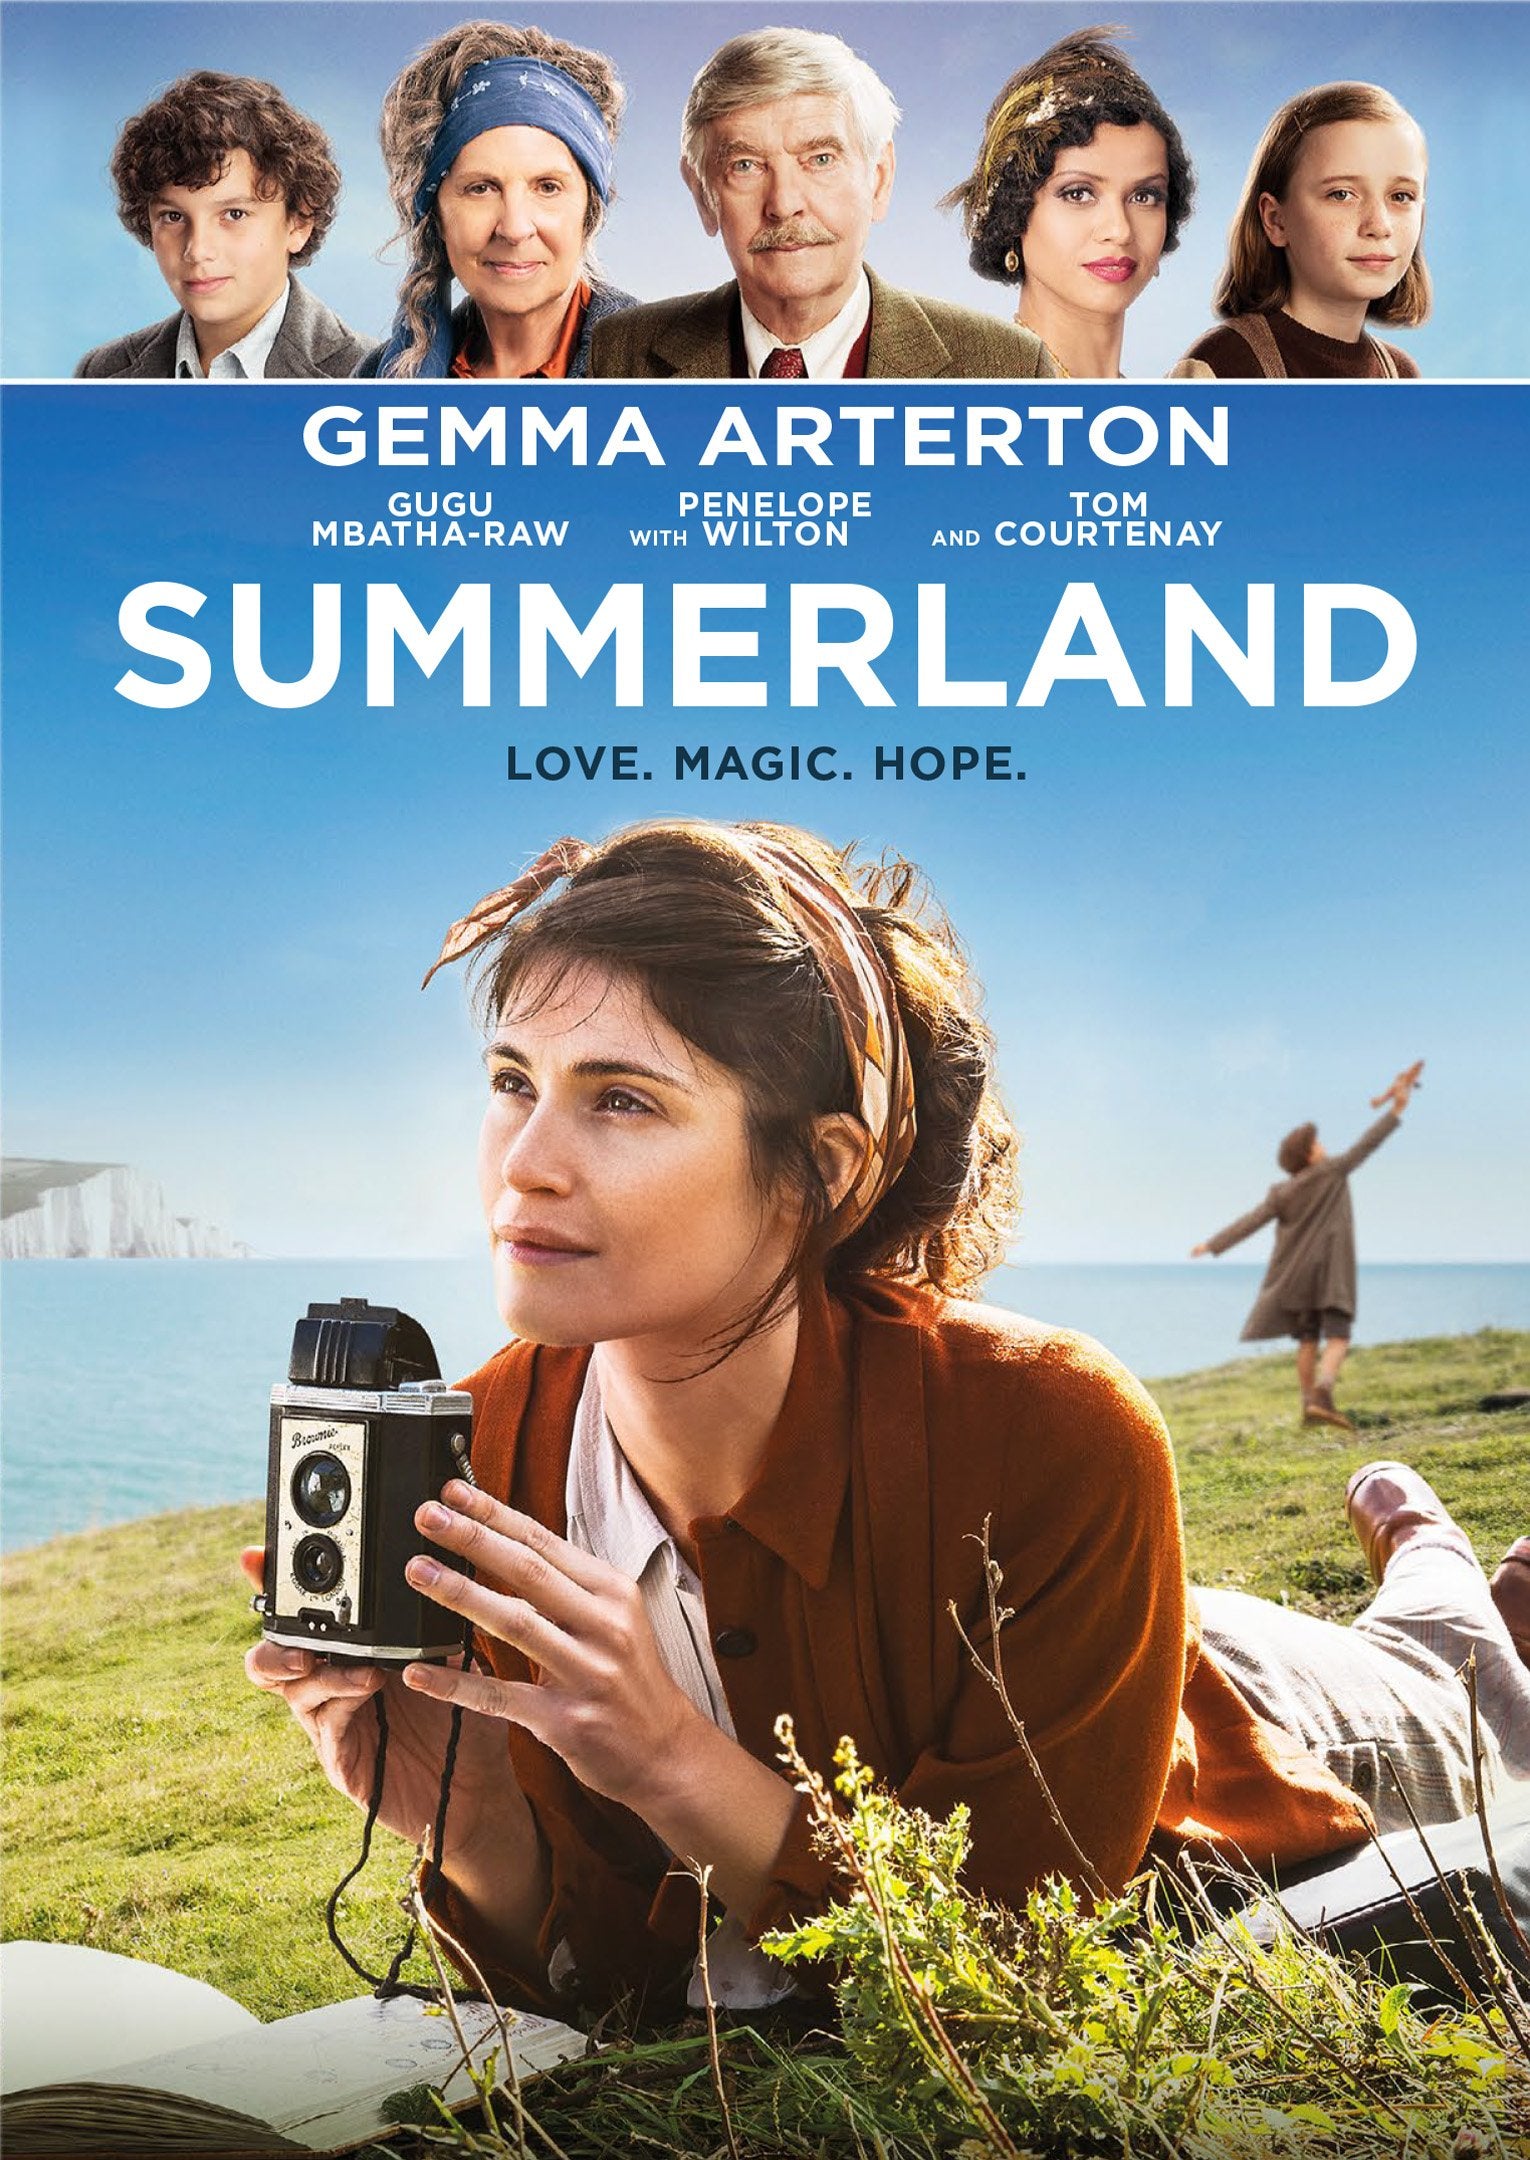 Summerland cover art